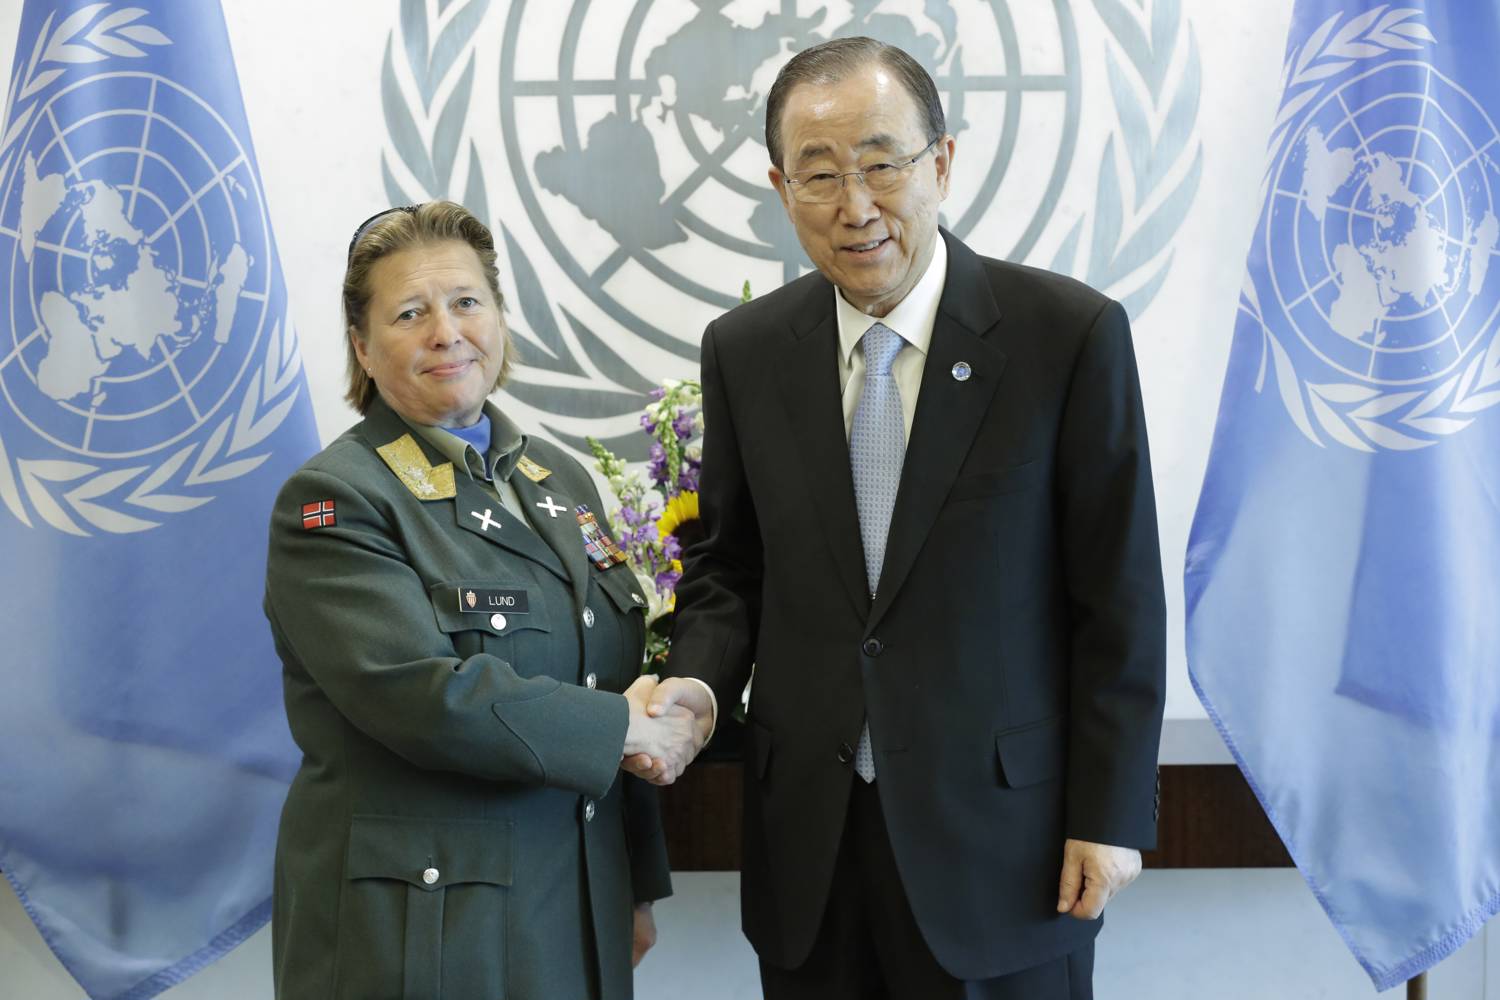 Secretary-General Ban Ki-moon (right) with Major General Kristin Lund of Norway in 2014. Photo: UN Photo / Mark Garten